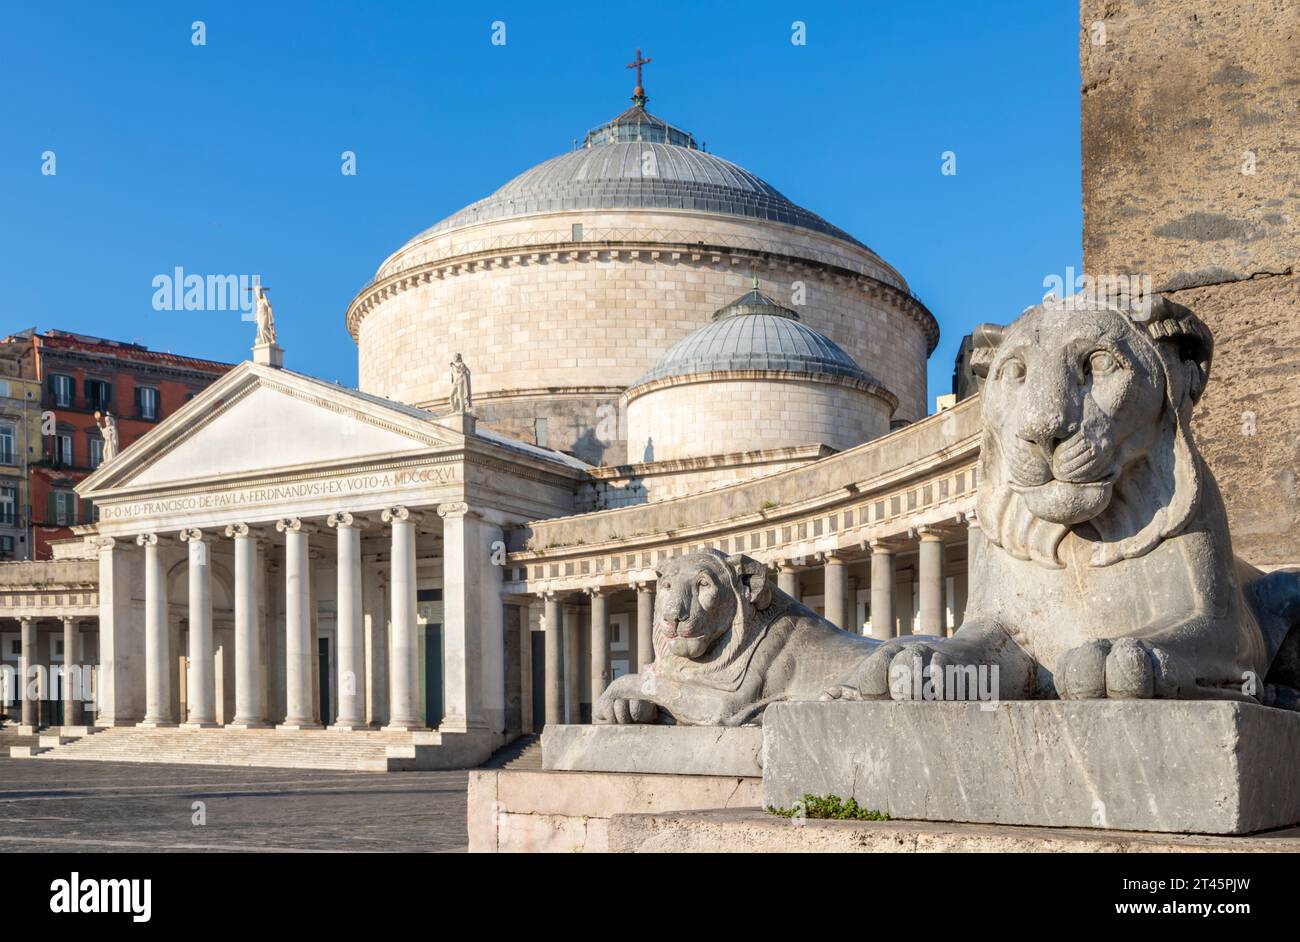 Neaples - die Basilika reale Pontificia San Francesco da Paola und Denkmal für Karl VII. Von Neapel - Piazza del Plebiscito. Stockfoto